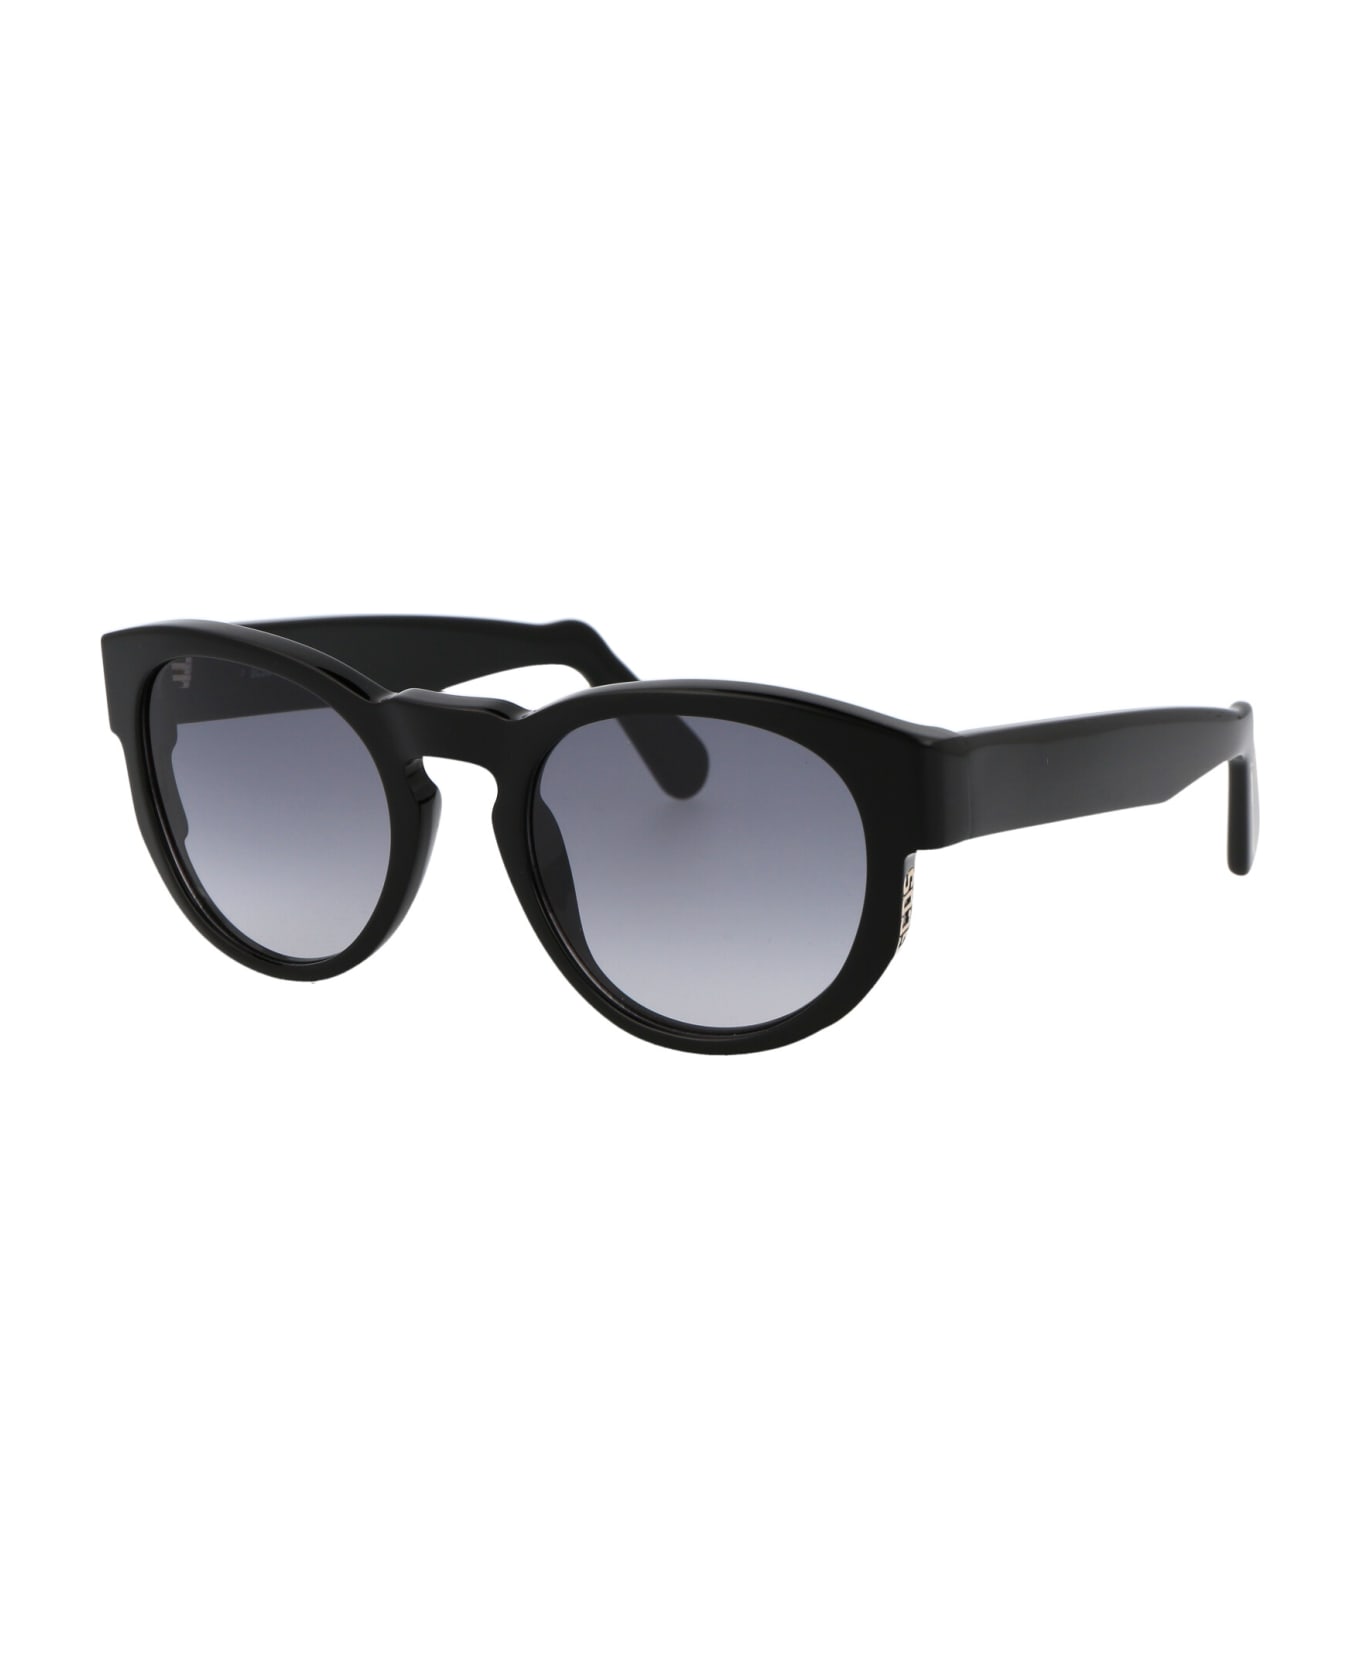 GCDS Gd0011 Sunglasses - 01B Nero Lucido/Fumo Grad サングラス